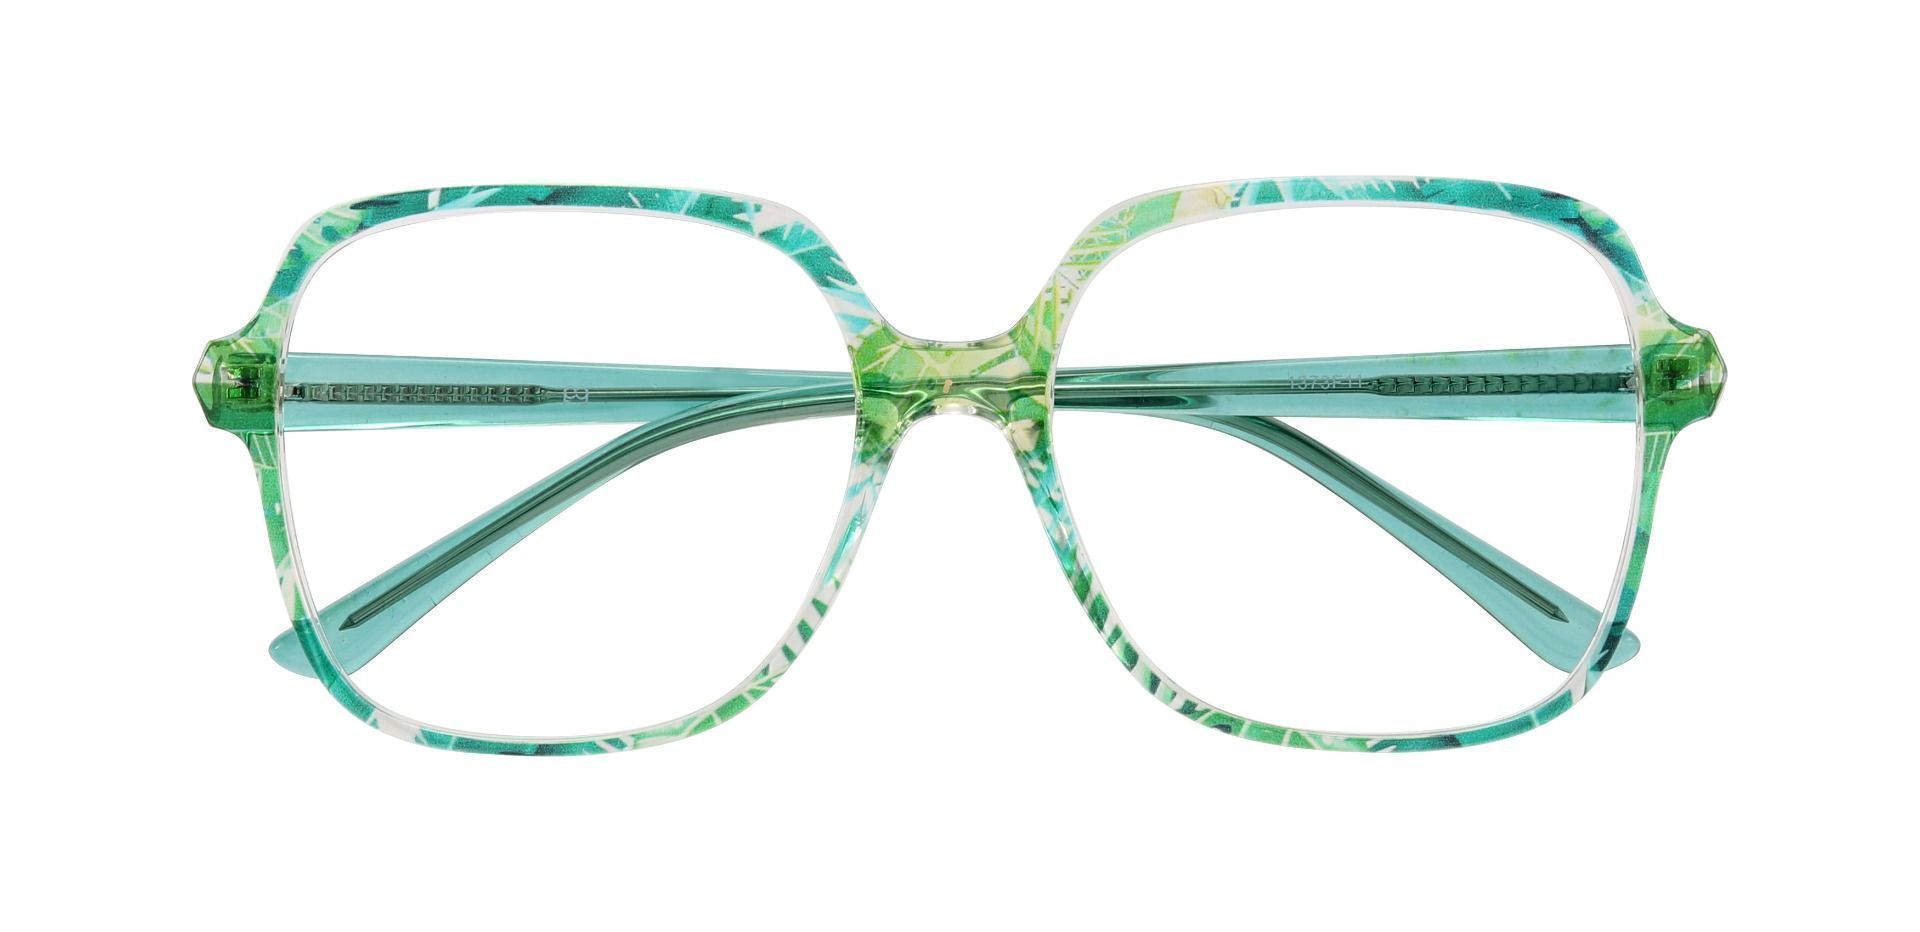 Zephyr Square Prescription Glasses - Green